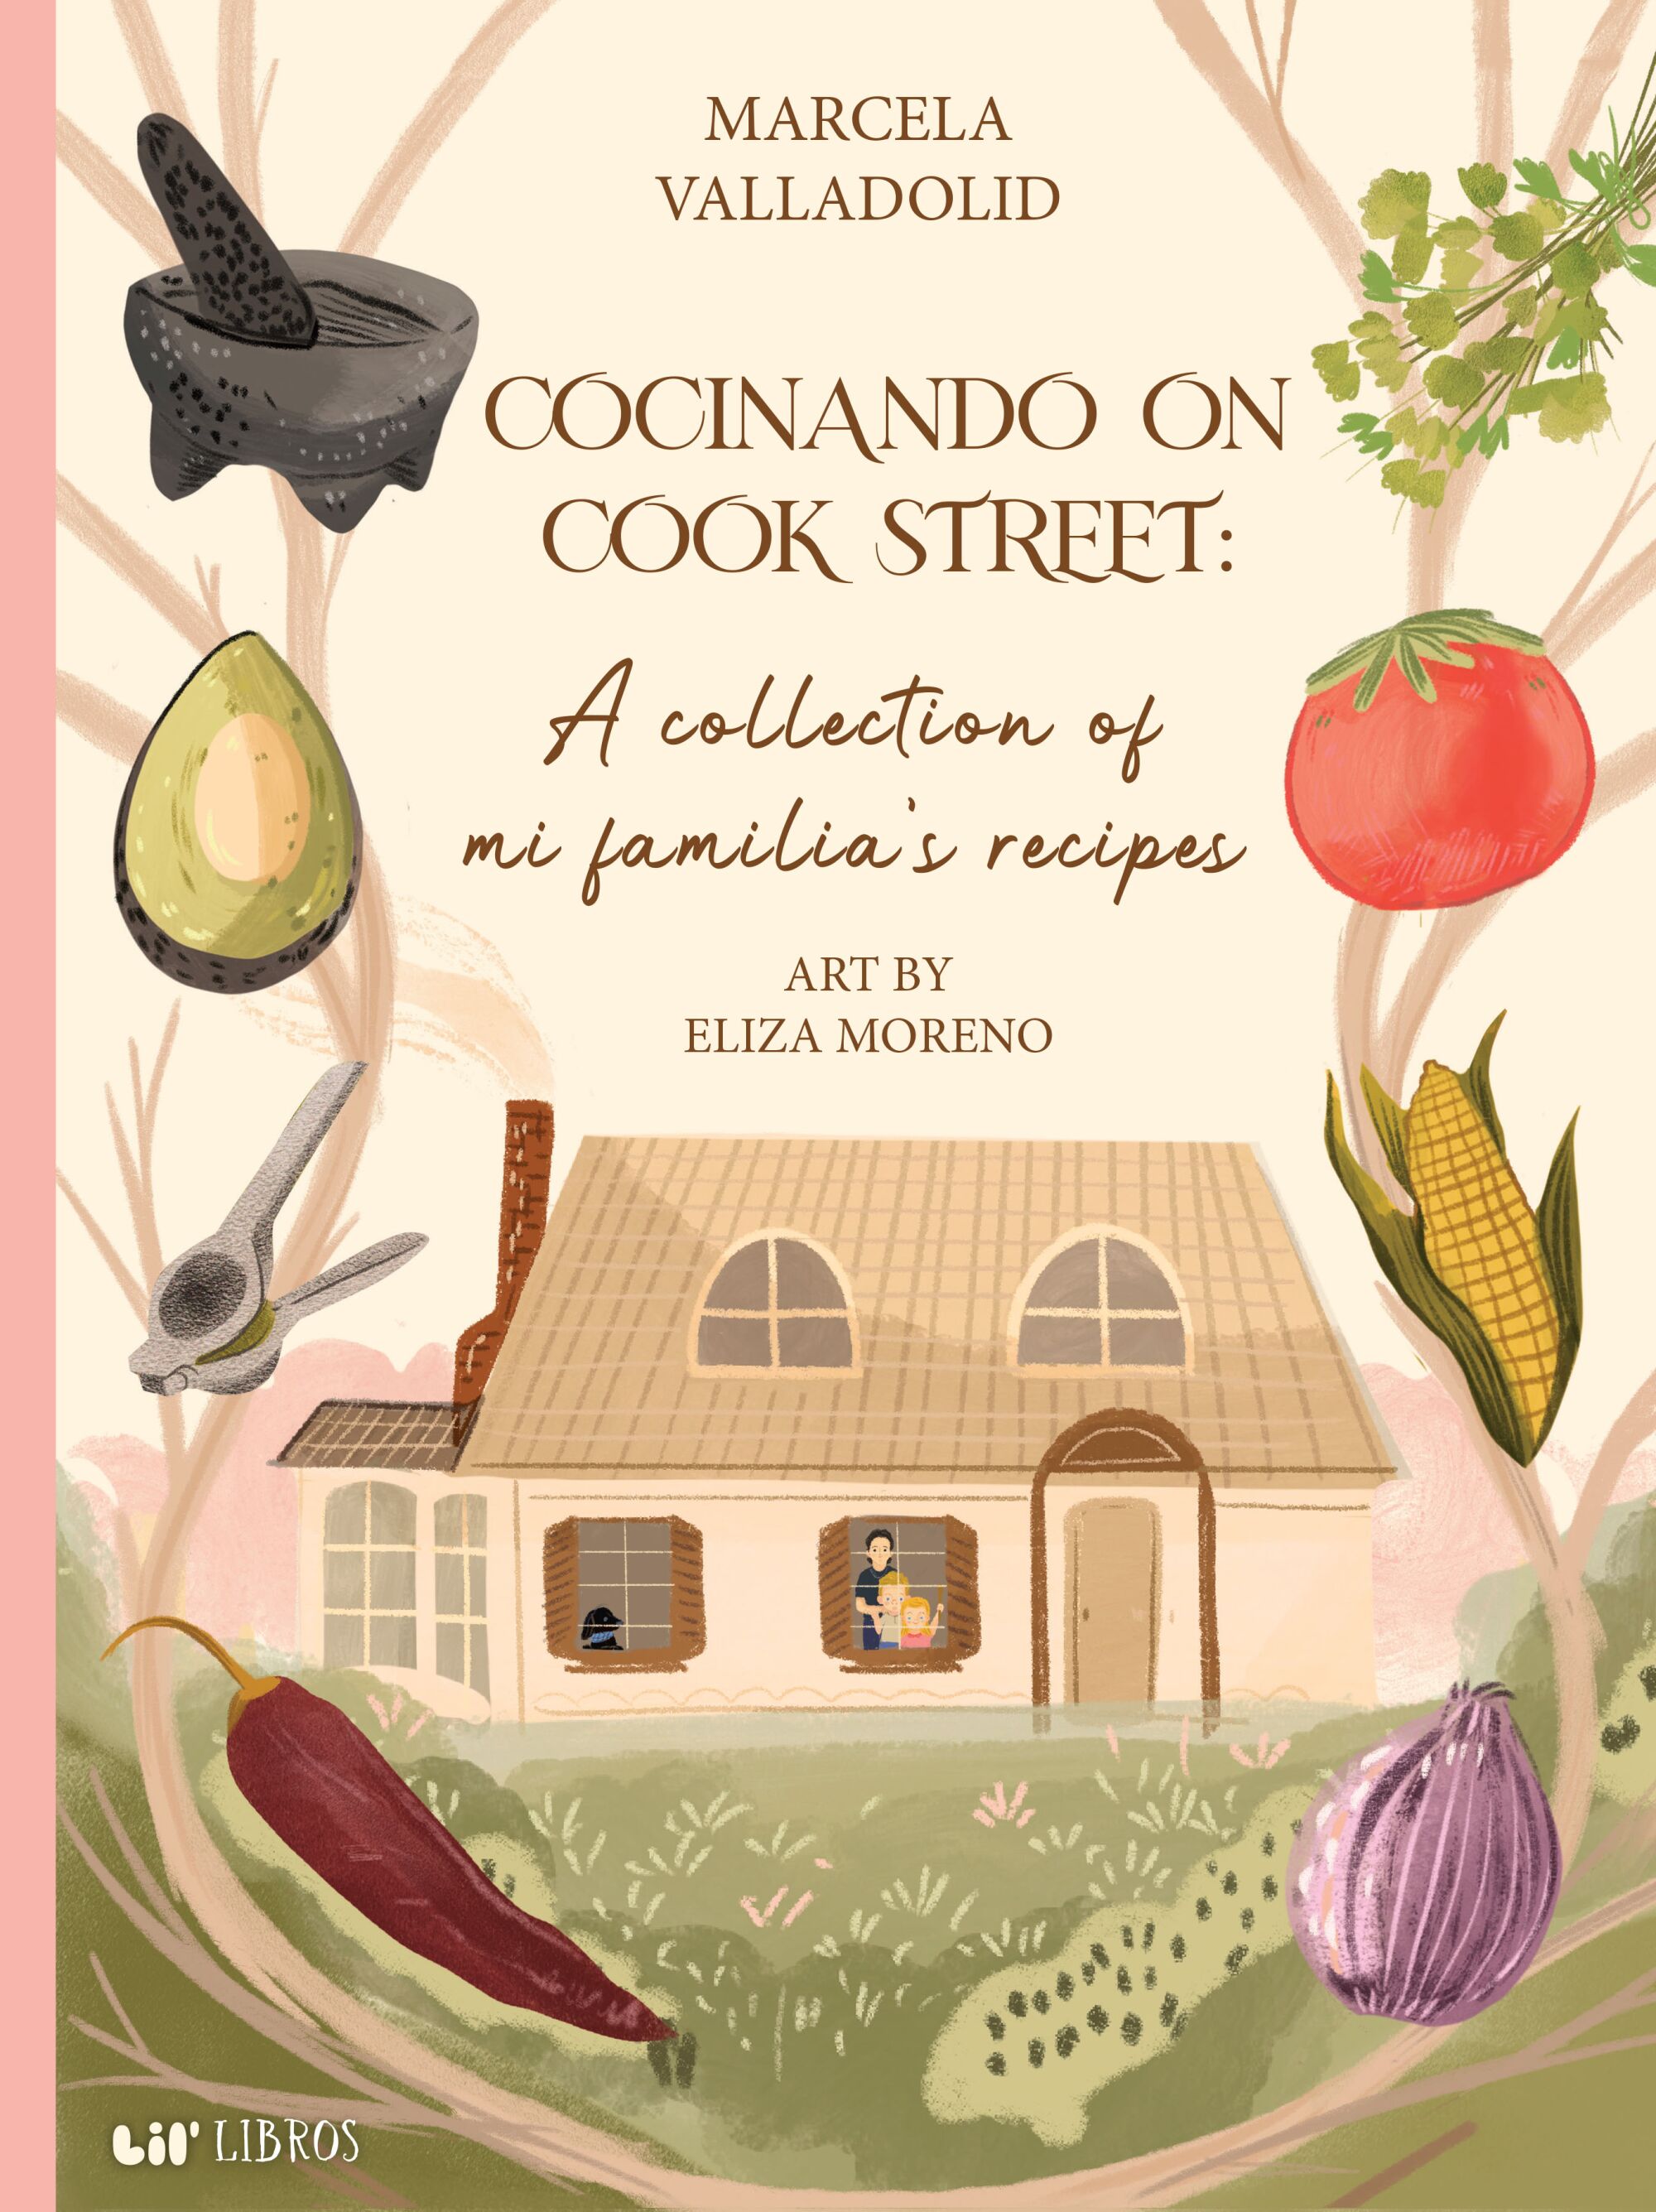 Marcela Valladolid's new book, “Cocinando on Cook Street."